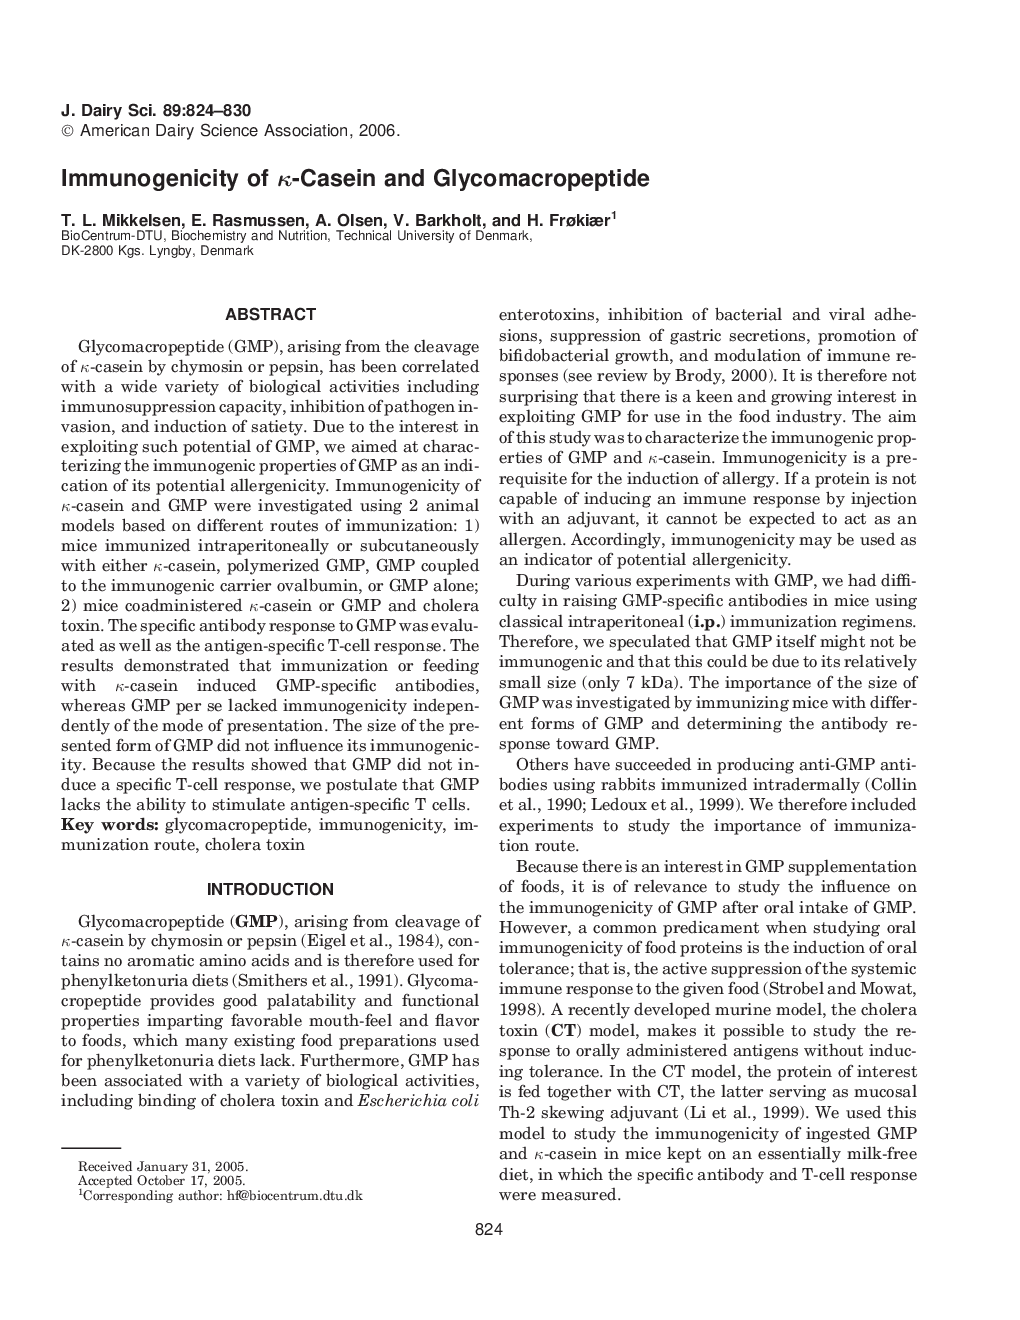 Immunogenicity of Îº-Casein and Glycomacropeptide